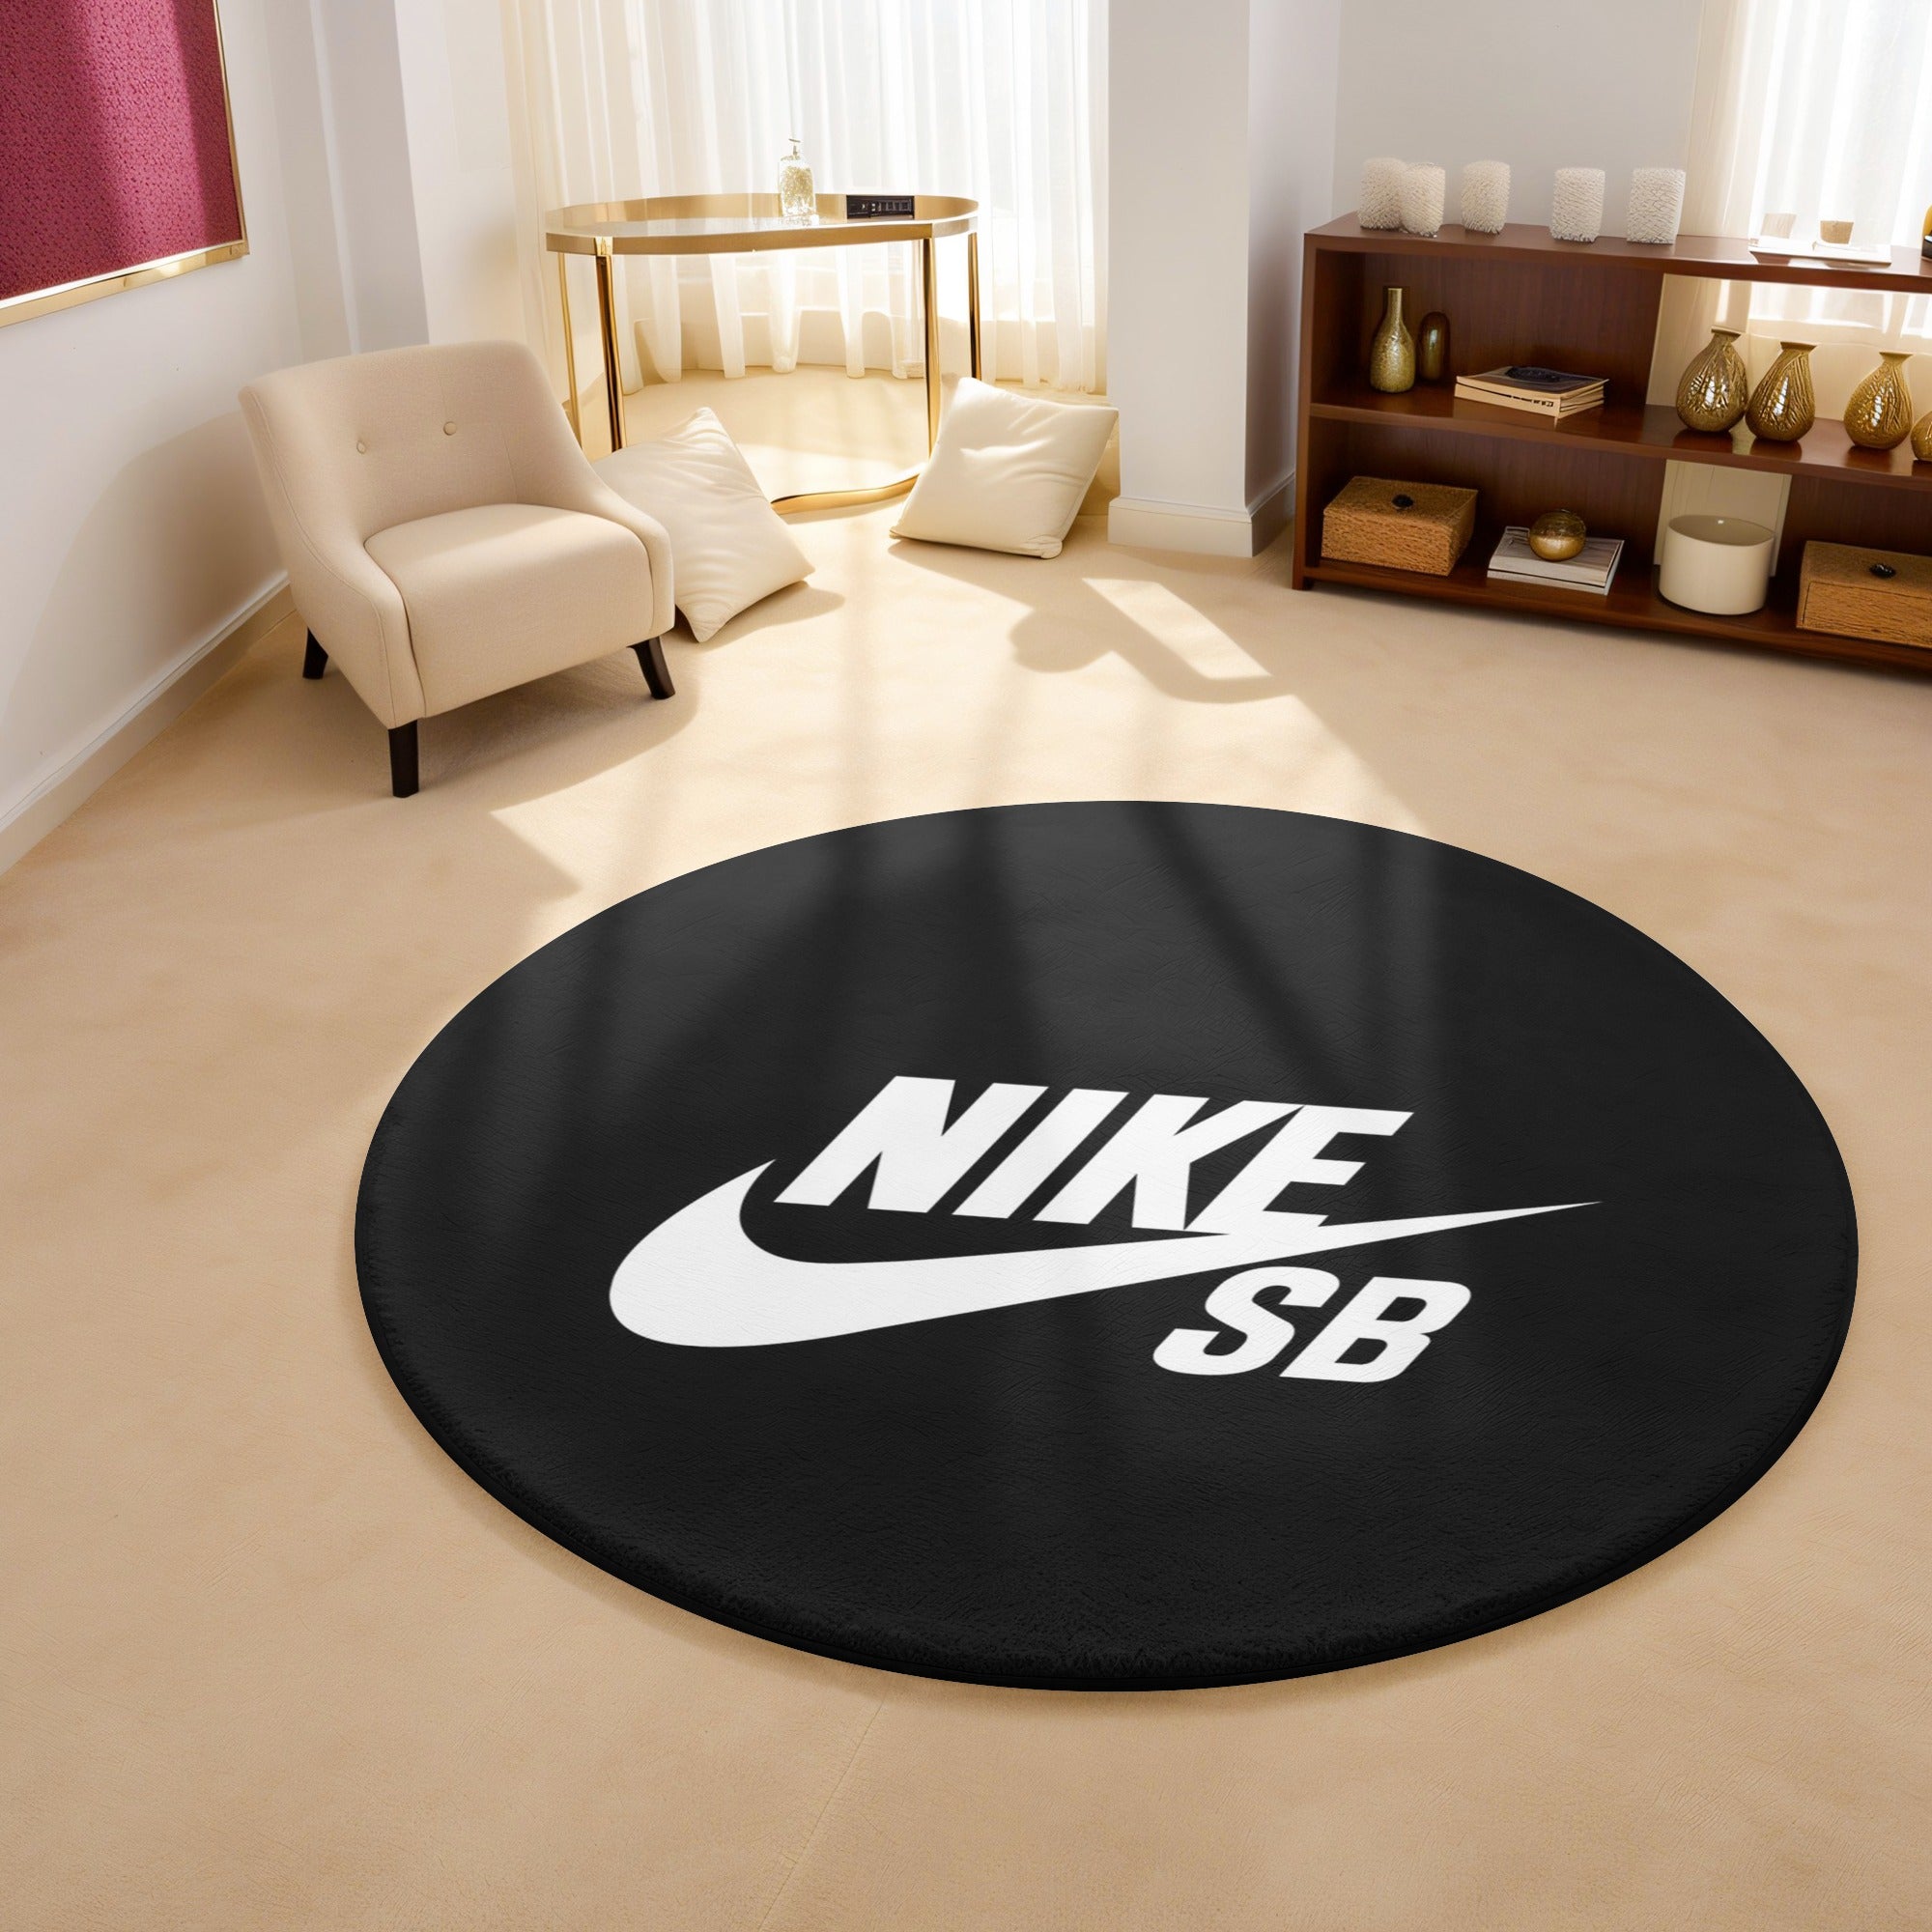 Buy Nike Rug